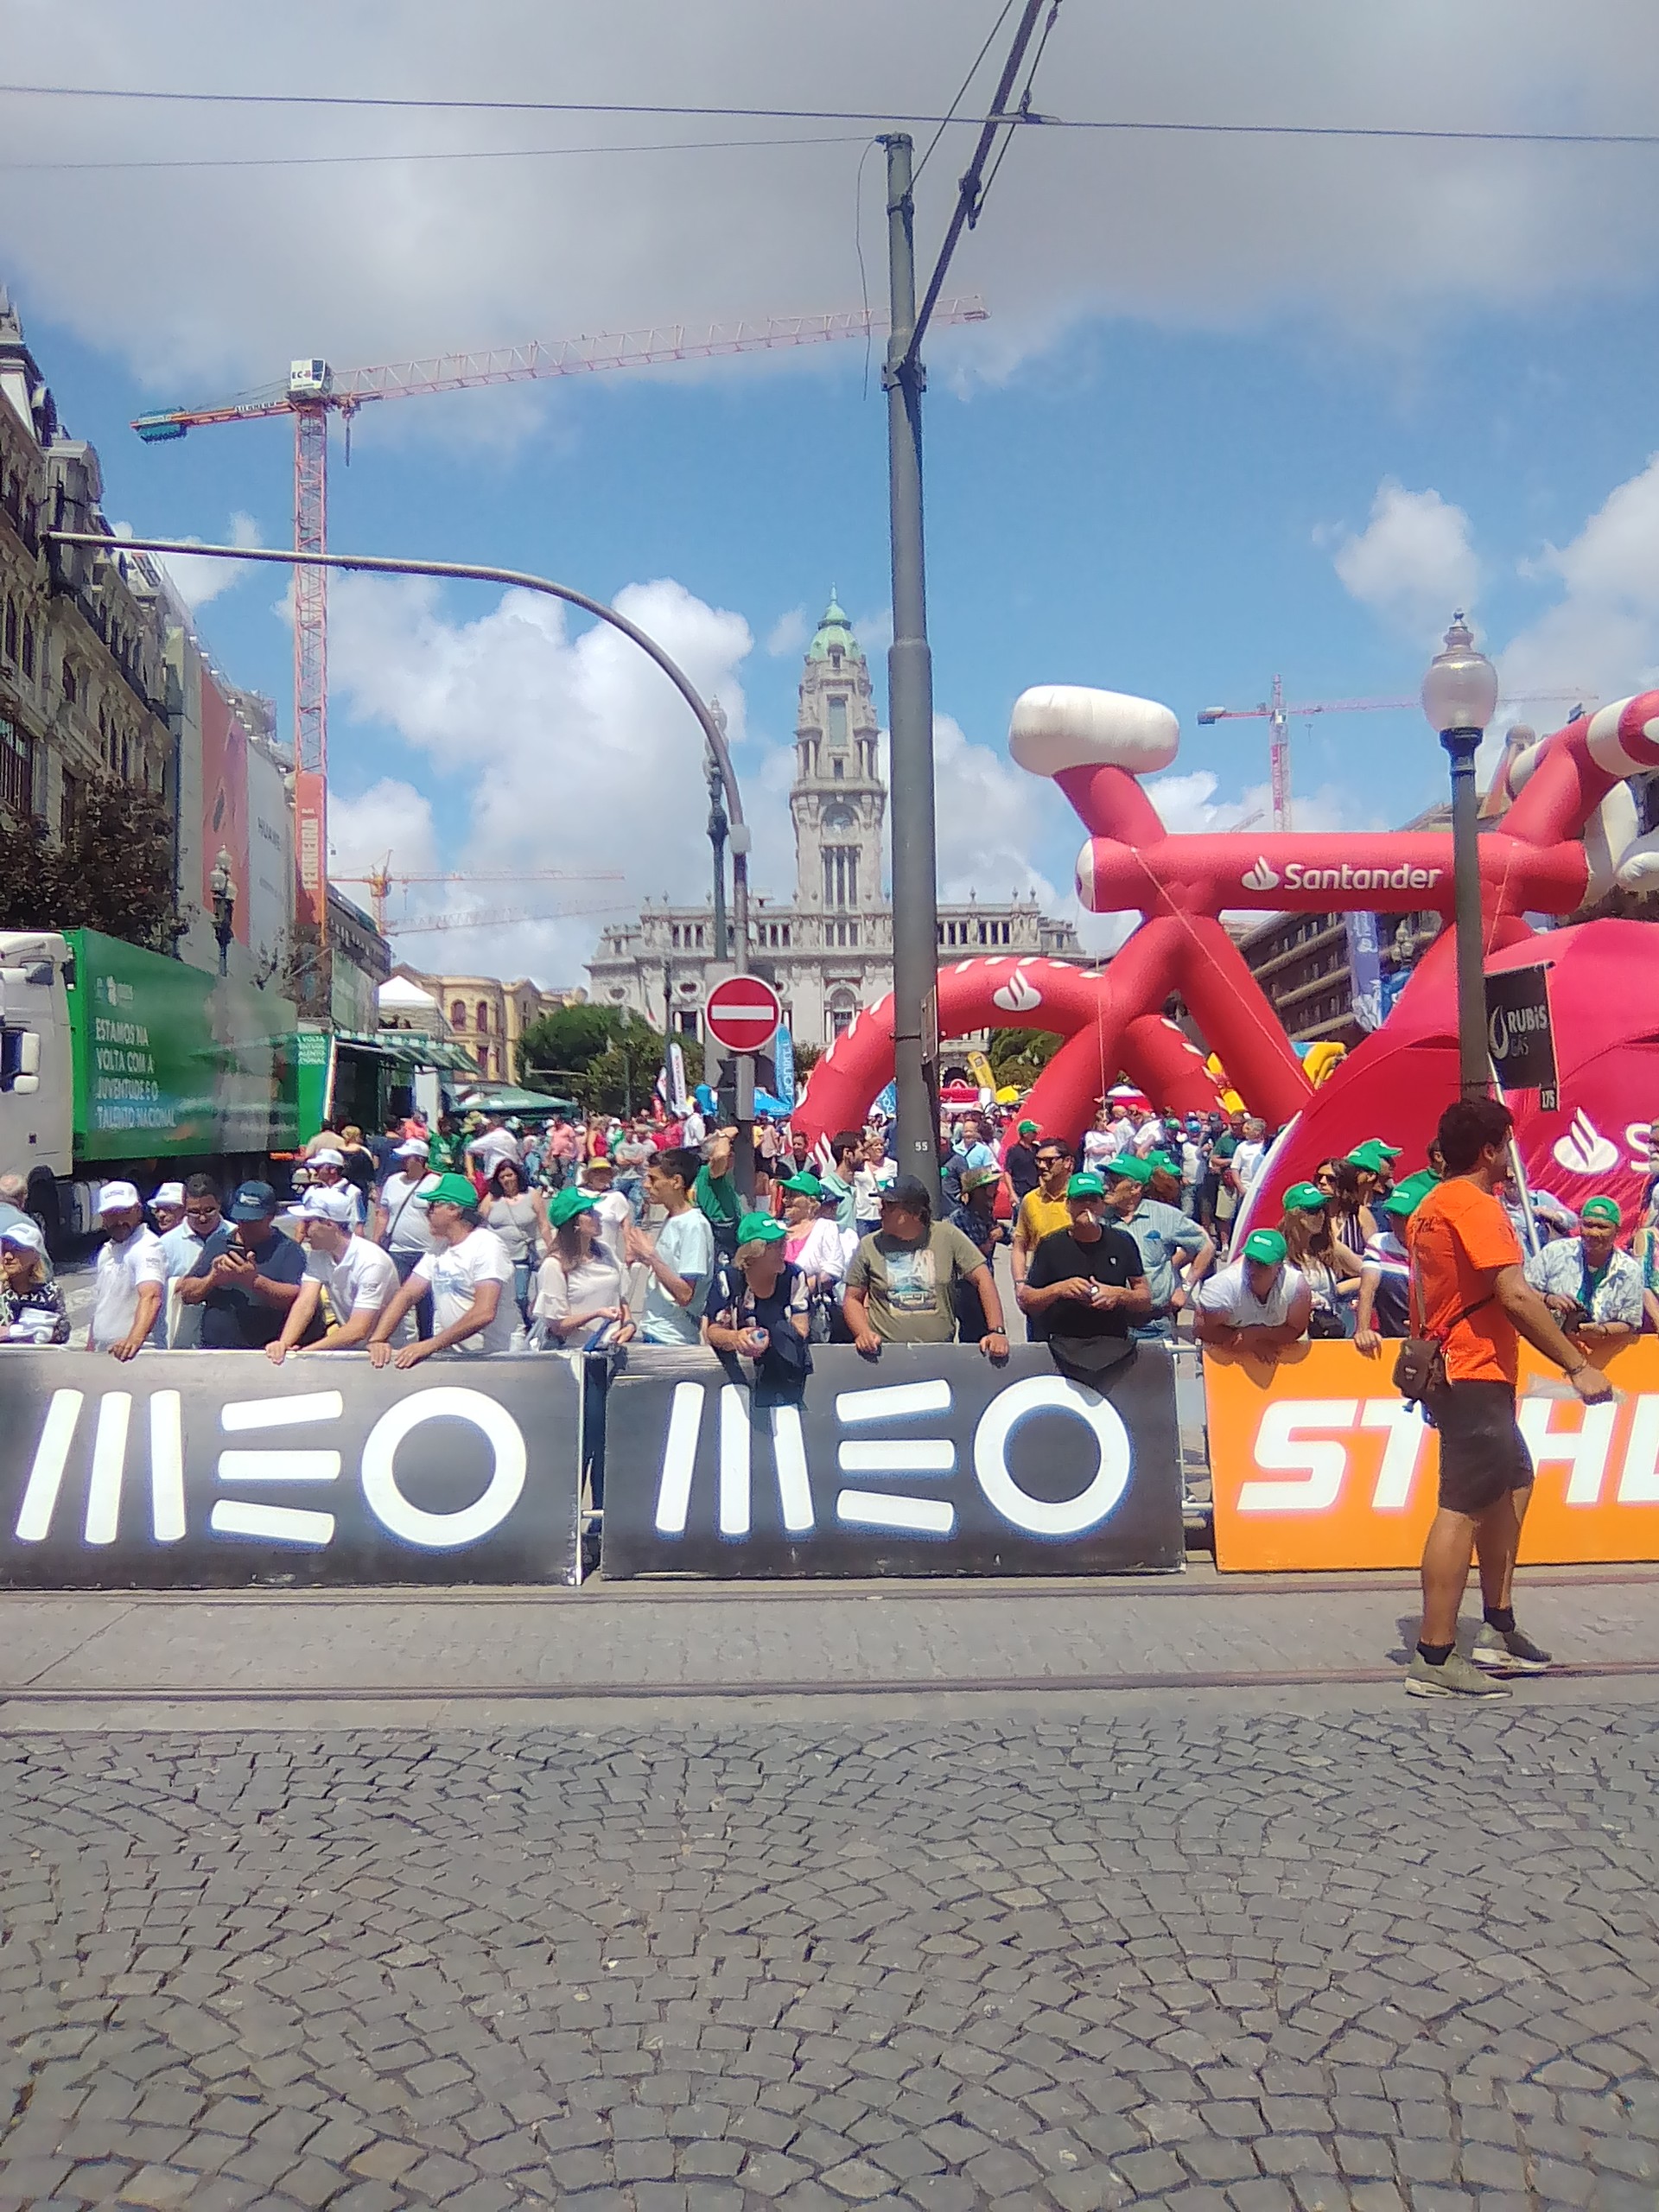 decouverte-cyclisme-tour-portugal-5405c0